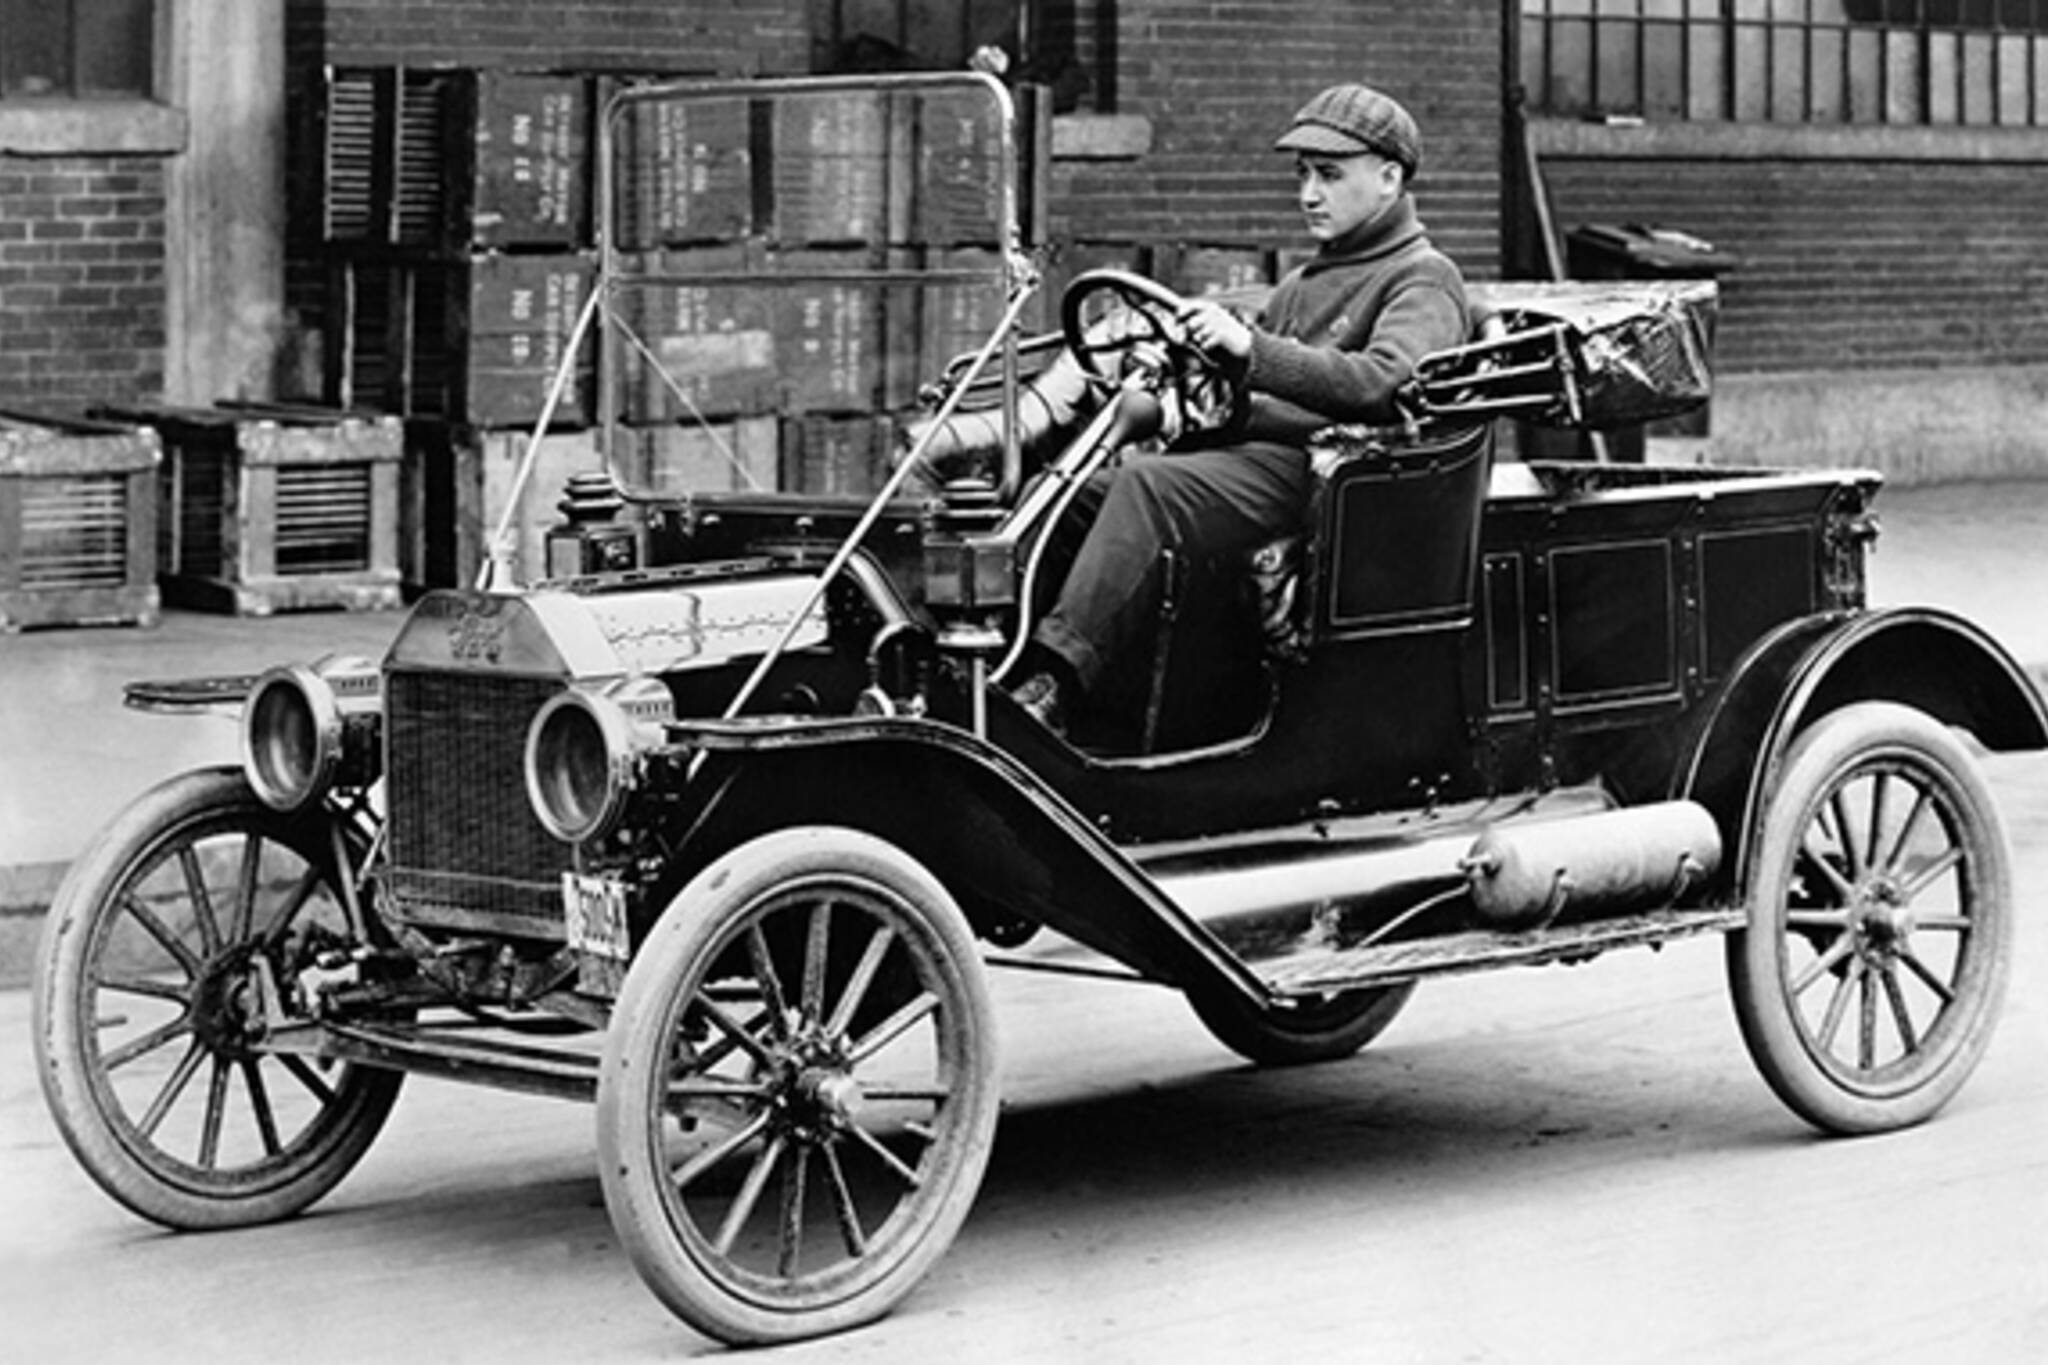 Год выпуска первой машины. Ford model t 1927. Ford model t 1908 и 1927.